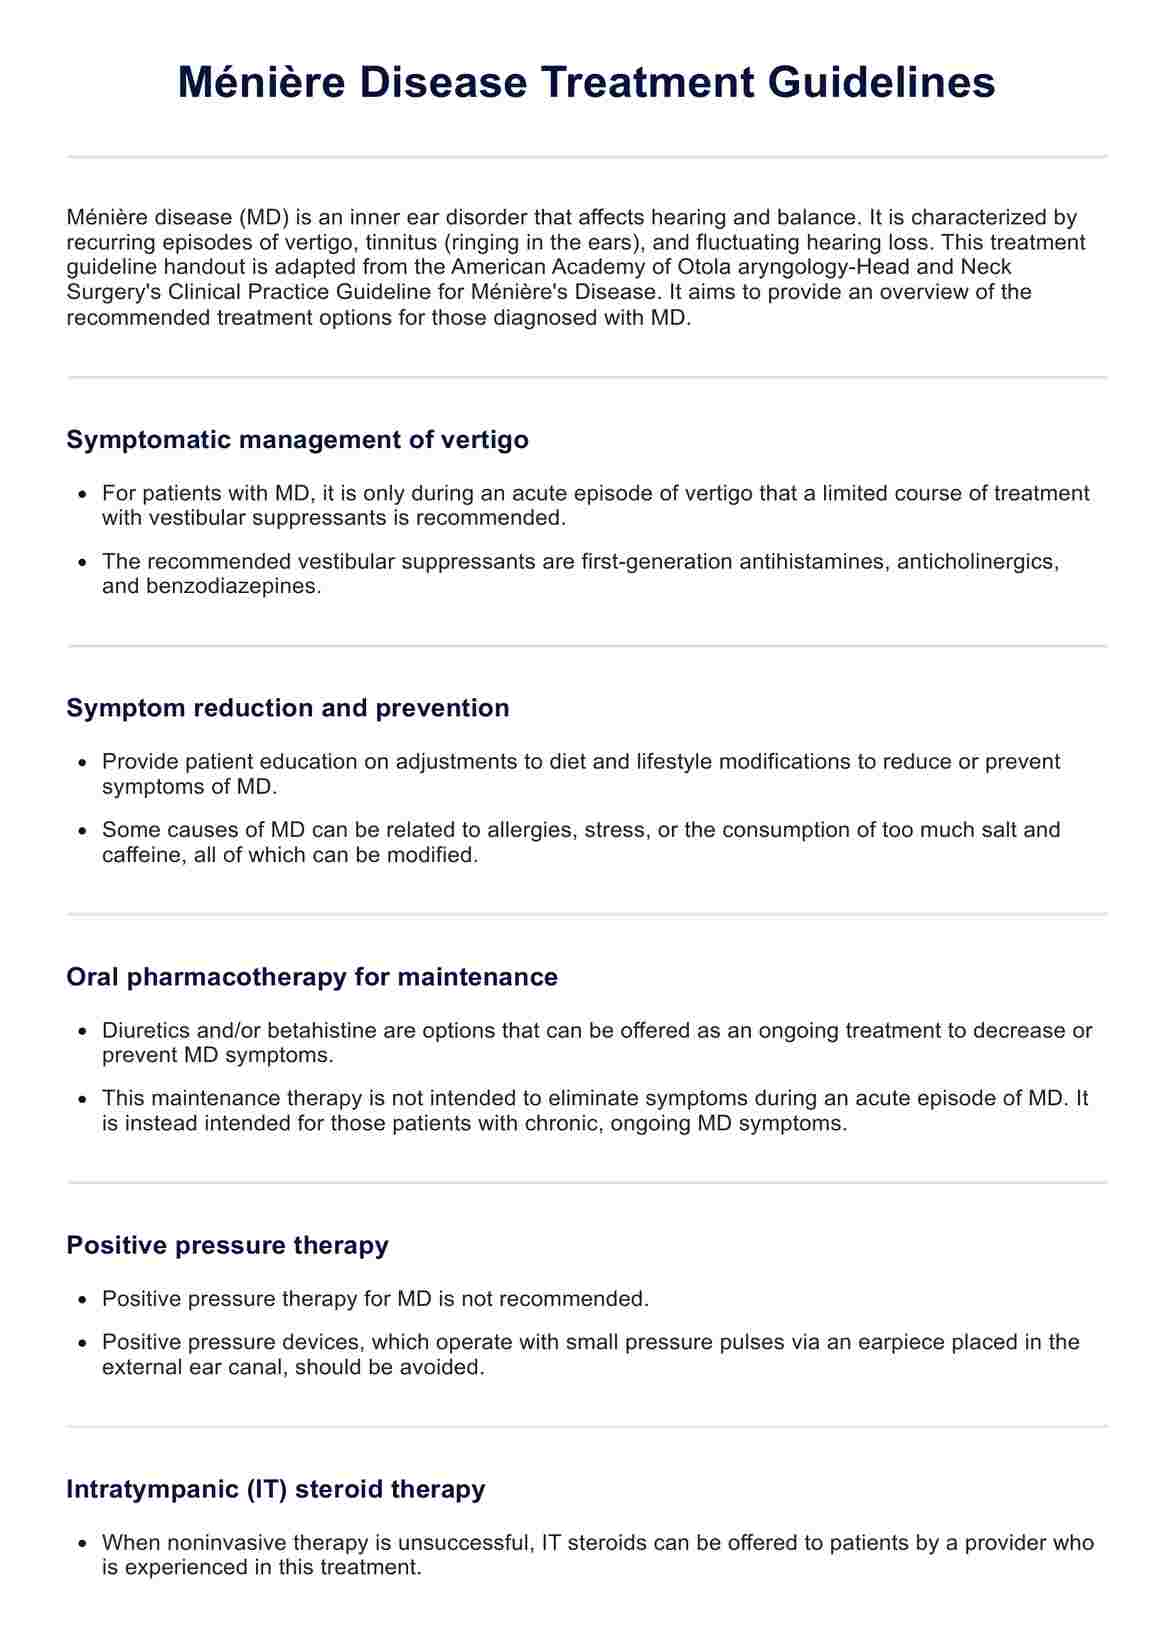 Meniere's Disease Treatment Guidelines PDF Example